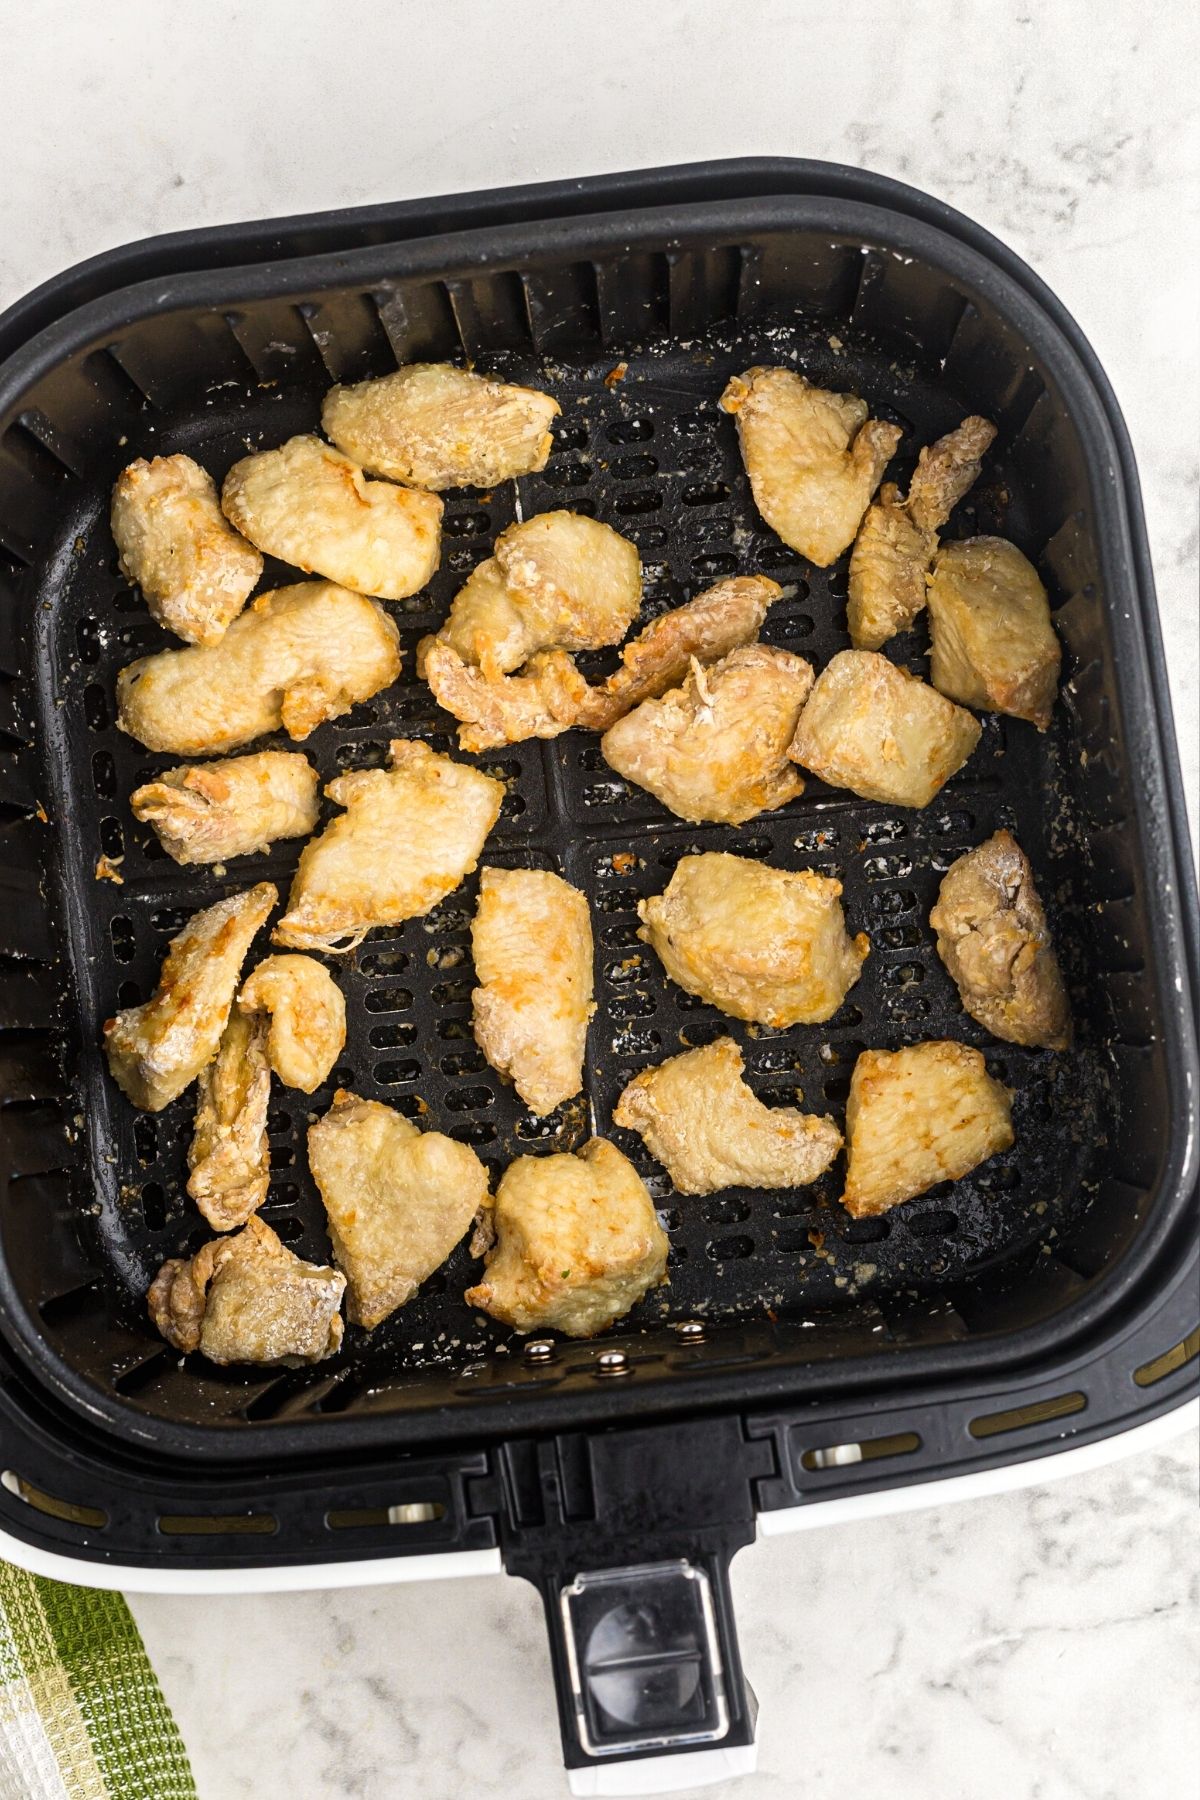 crispy golden chicken pieces cooked in the air fryer basket